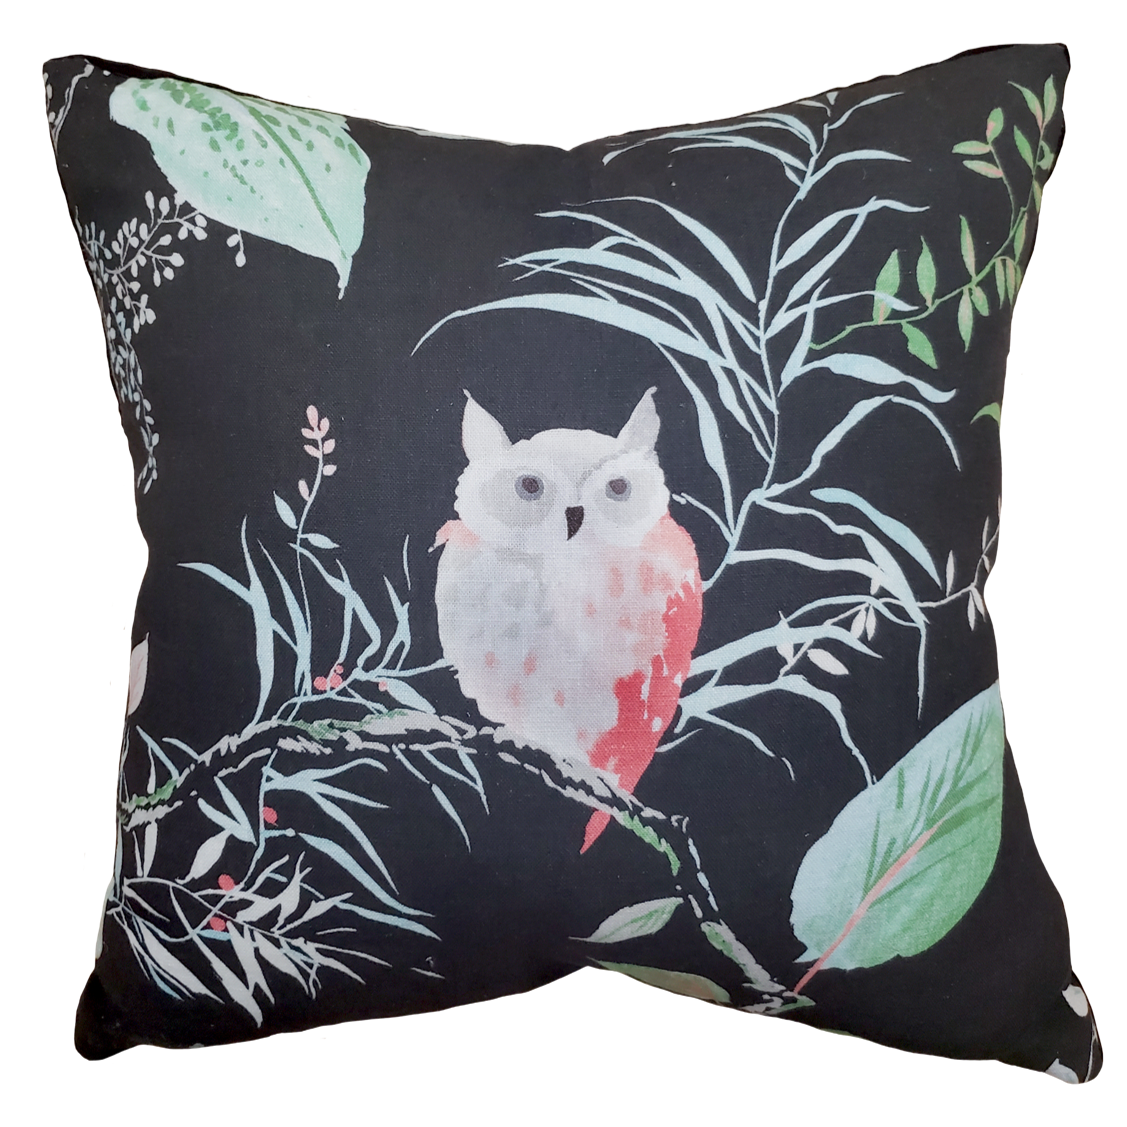 Owlish Cushion